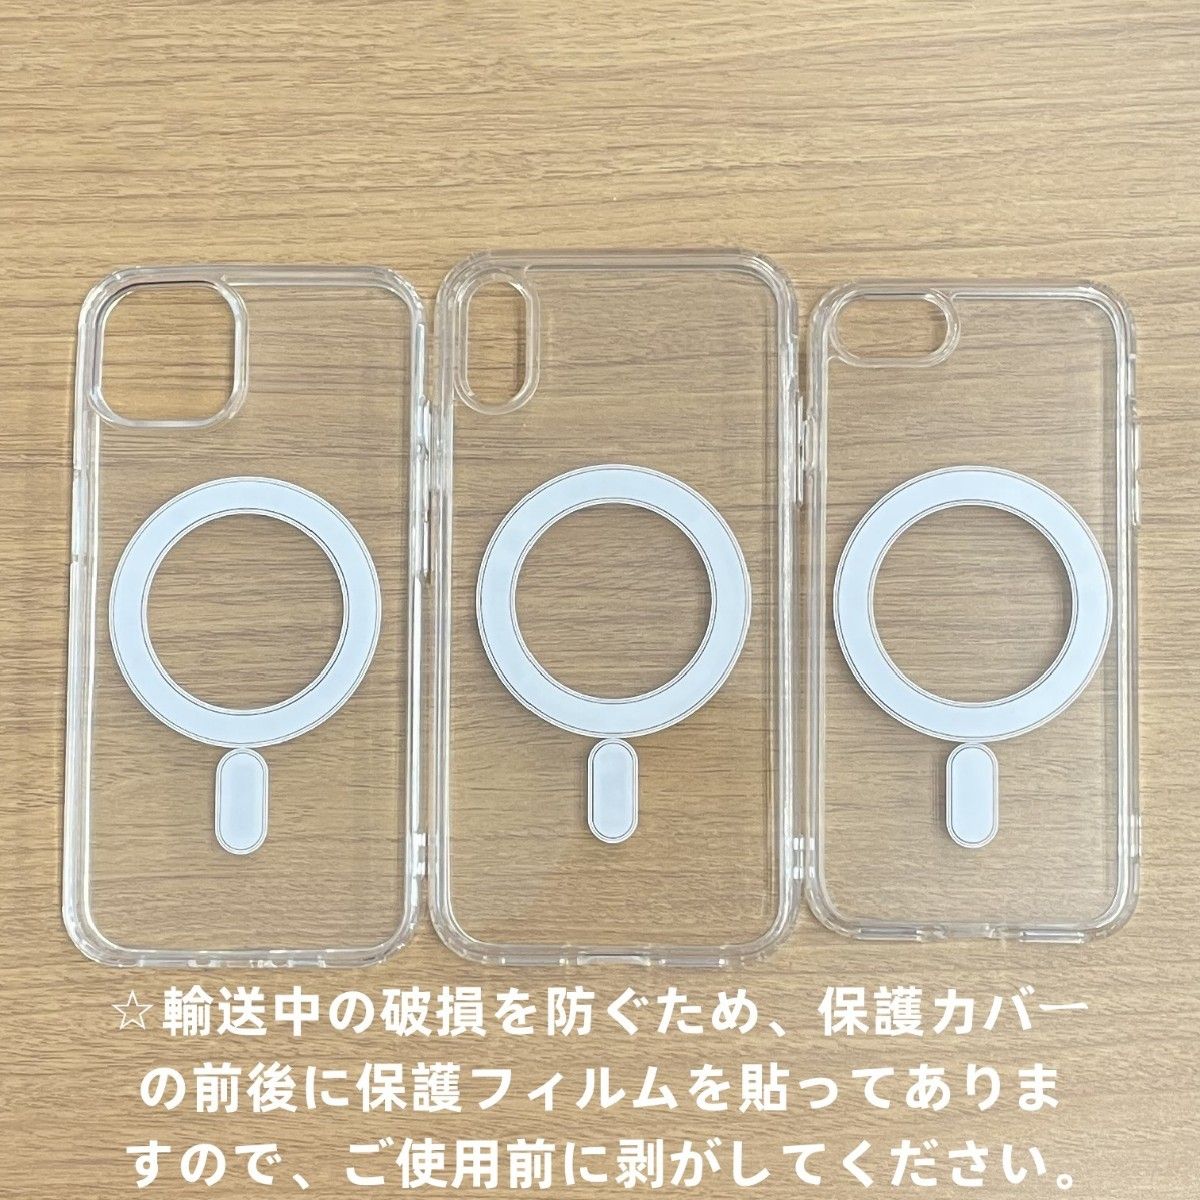 Magsafe充電器+電源アダプタ+ iPhoneXS MaxクリアケースF